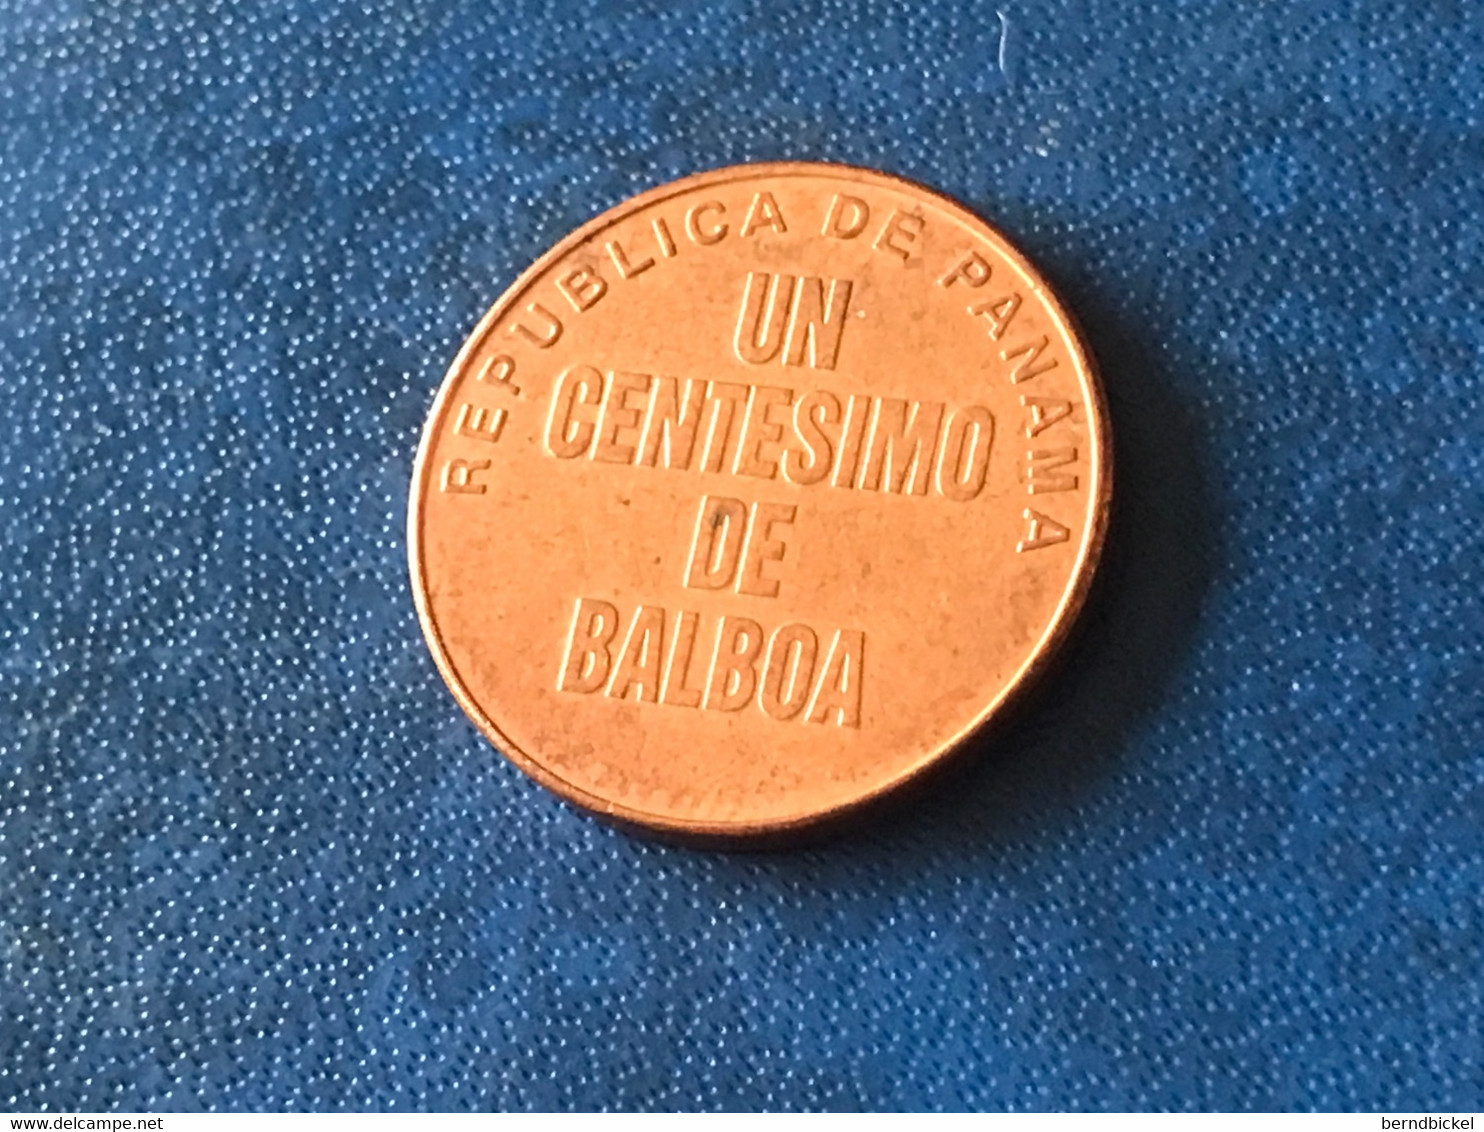 Münzen Münze Umlaufmünze Panama 1 Centesimo De Balboa 1996 - Panama